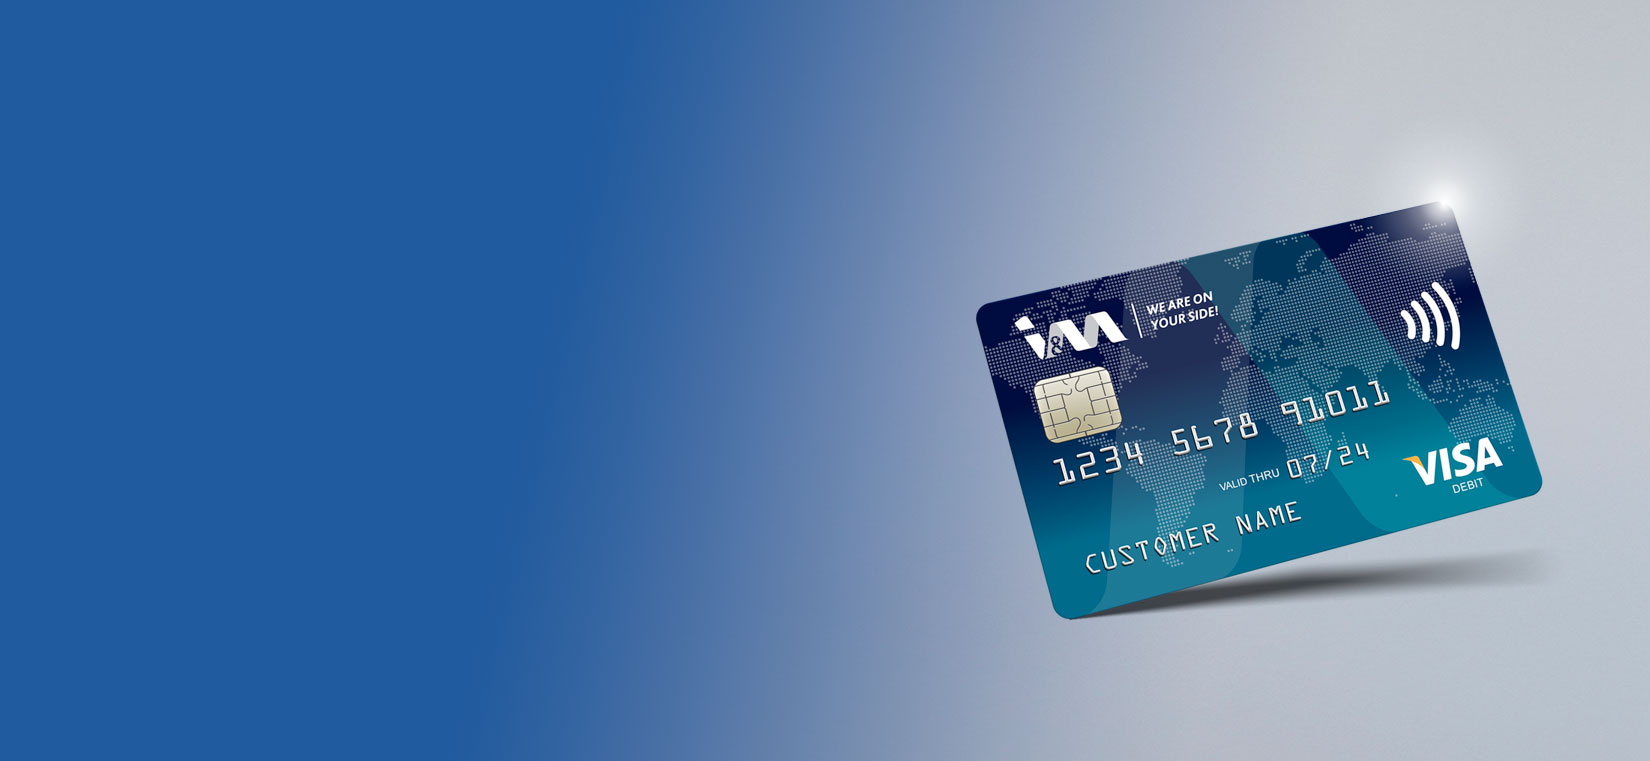 I&M Bank Uganda - I&M Visa Classic Debit Card